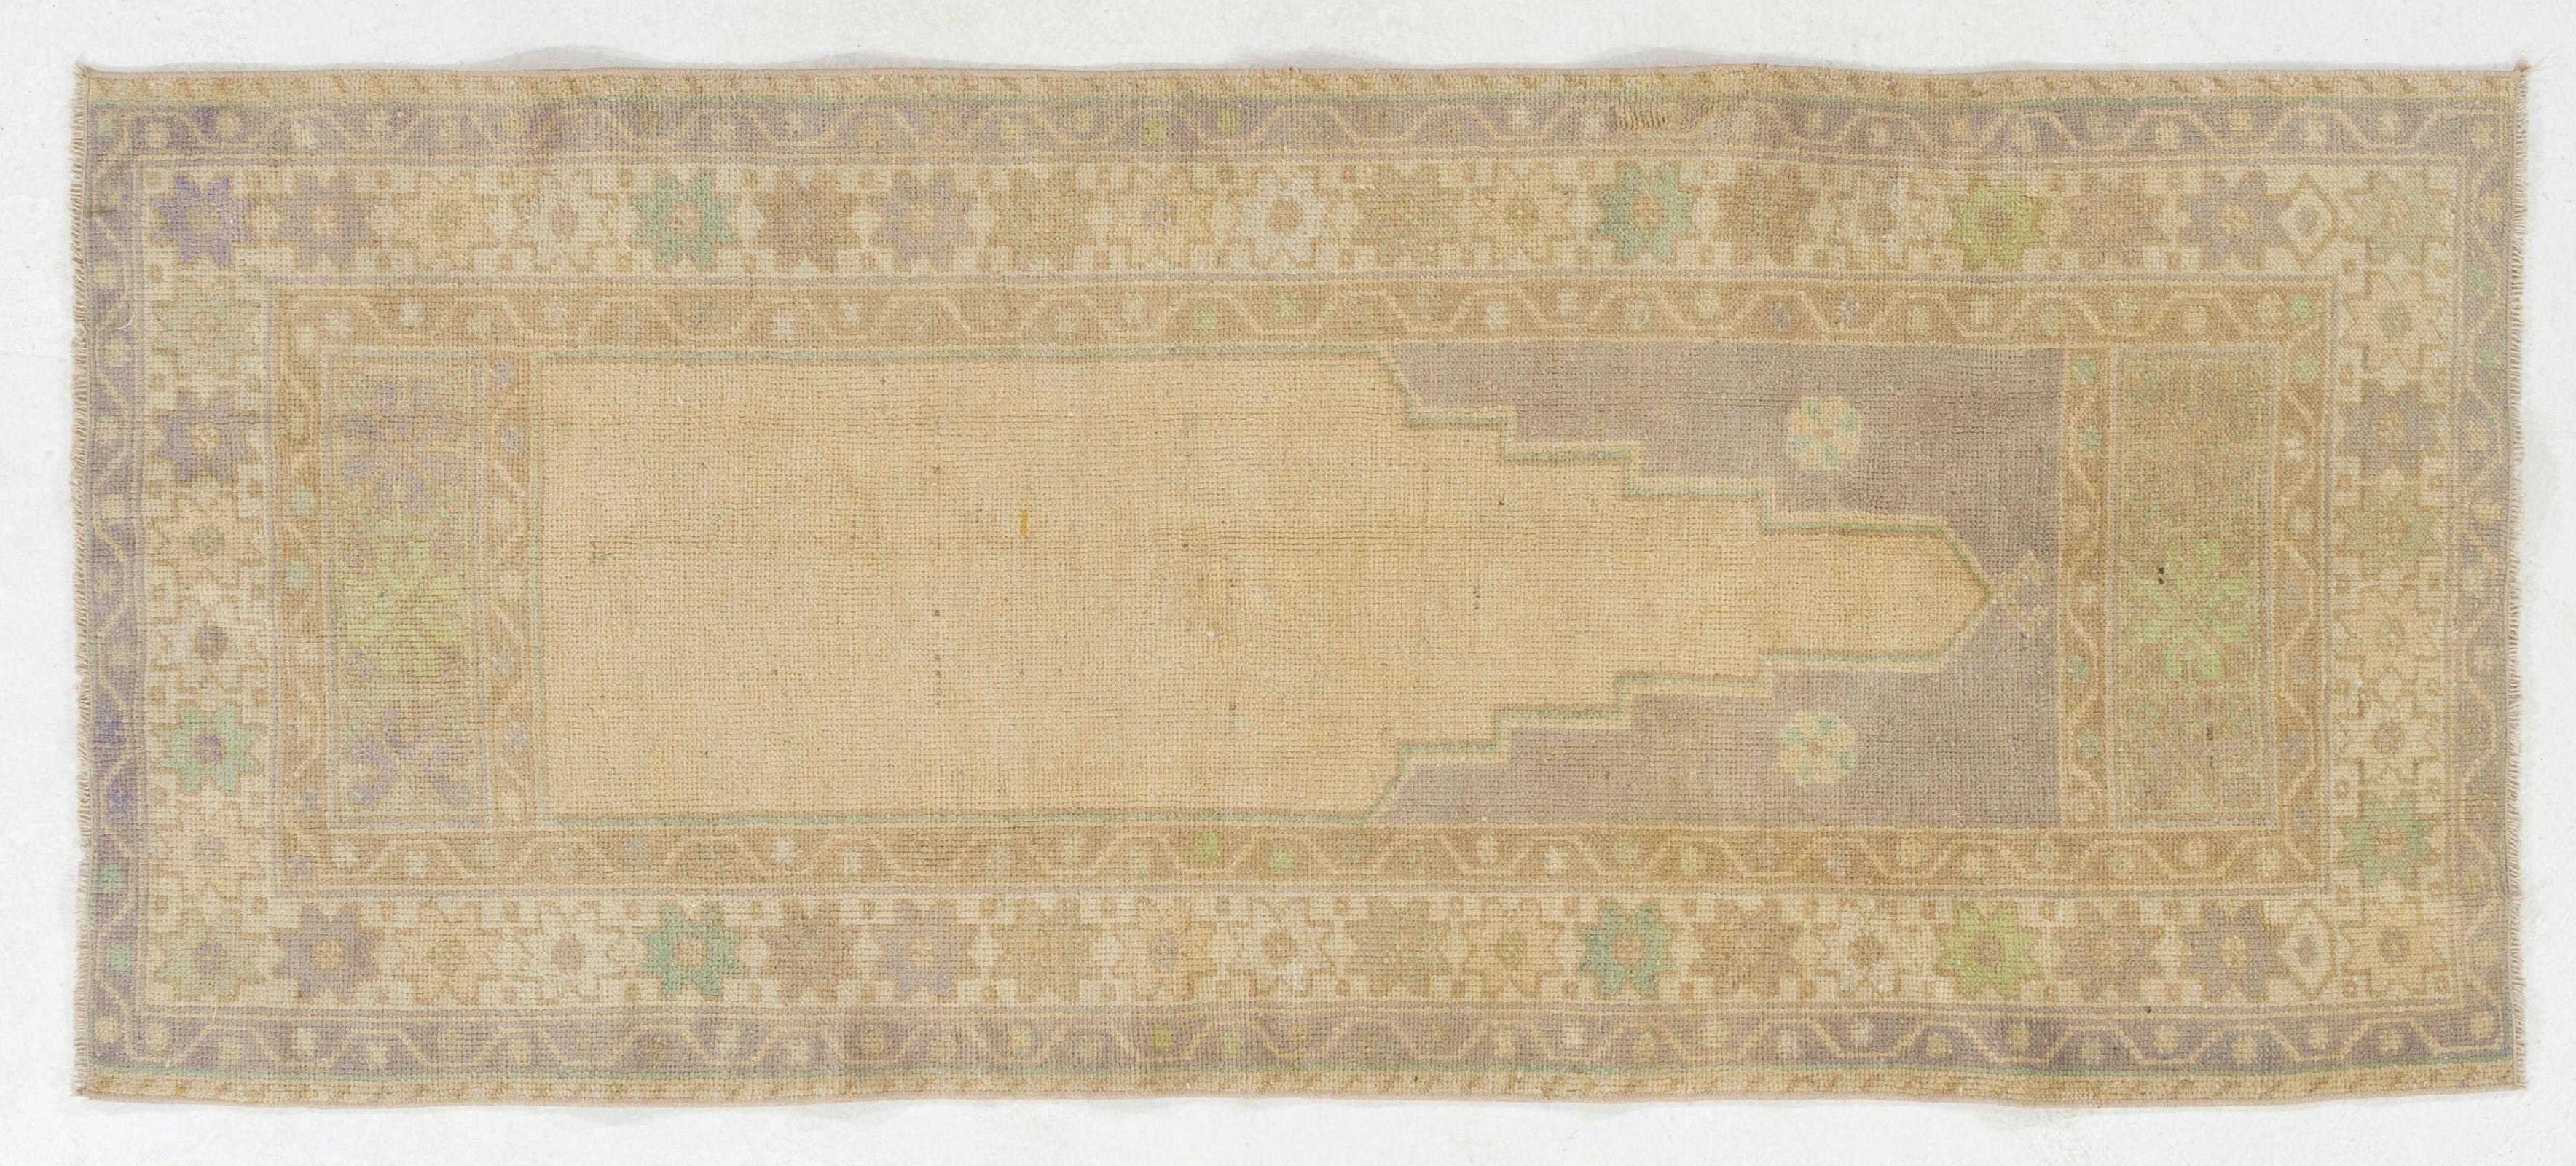 2.8x6.6 Ft Faded Turkish Prayer Rug, Vintage Handmade Accent Rug. Beige Door Mat In Good Condition For Sale In Philadelphia, PA